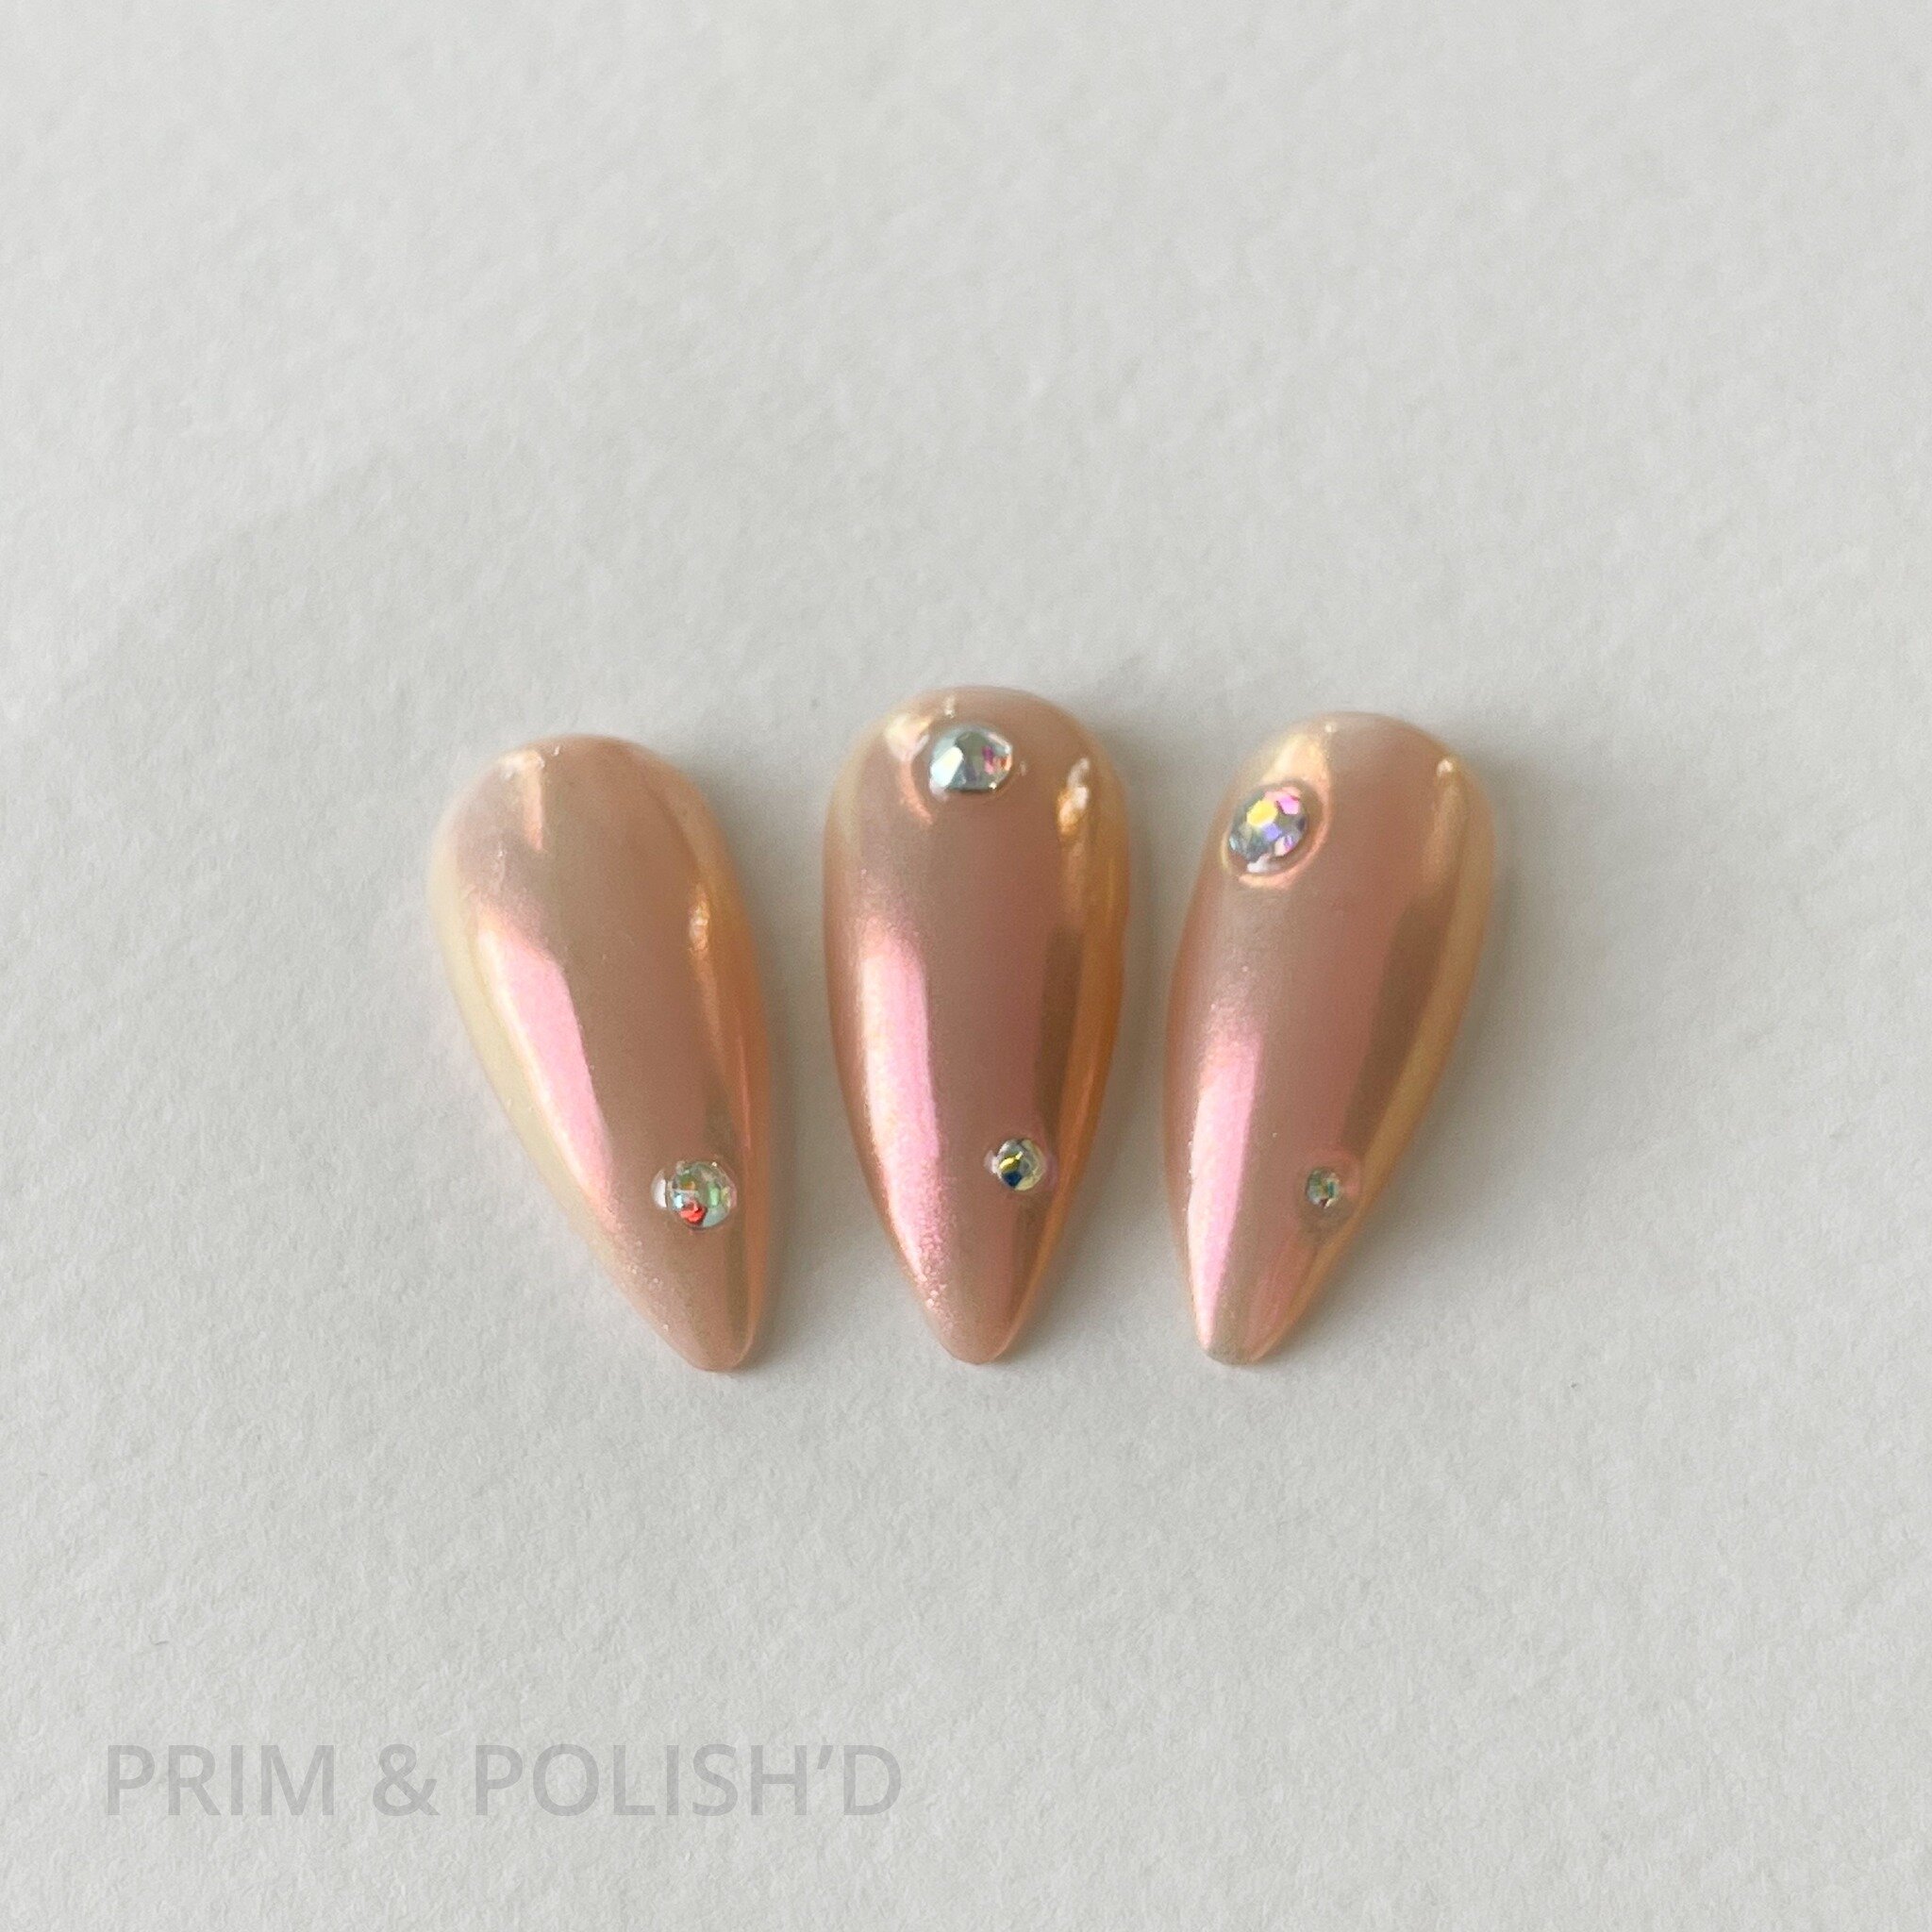 #almondnails #rhinestonenails #almondnails #nails #nailsart #nailsdesign